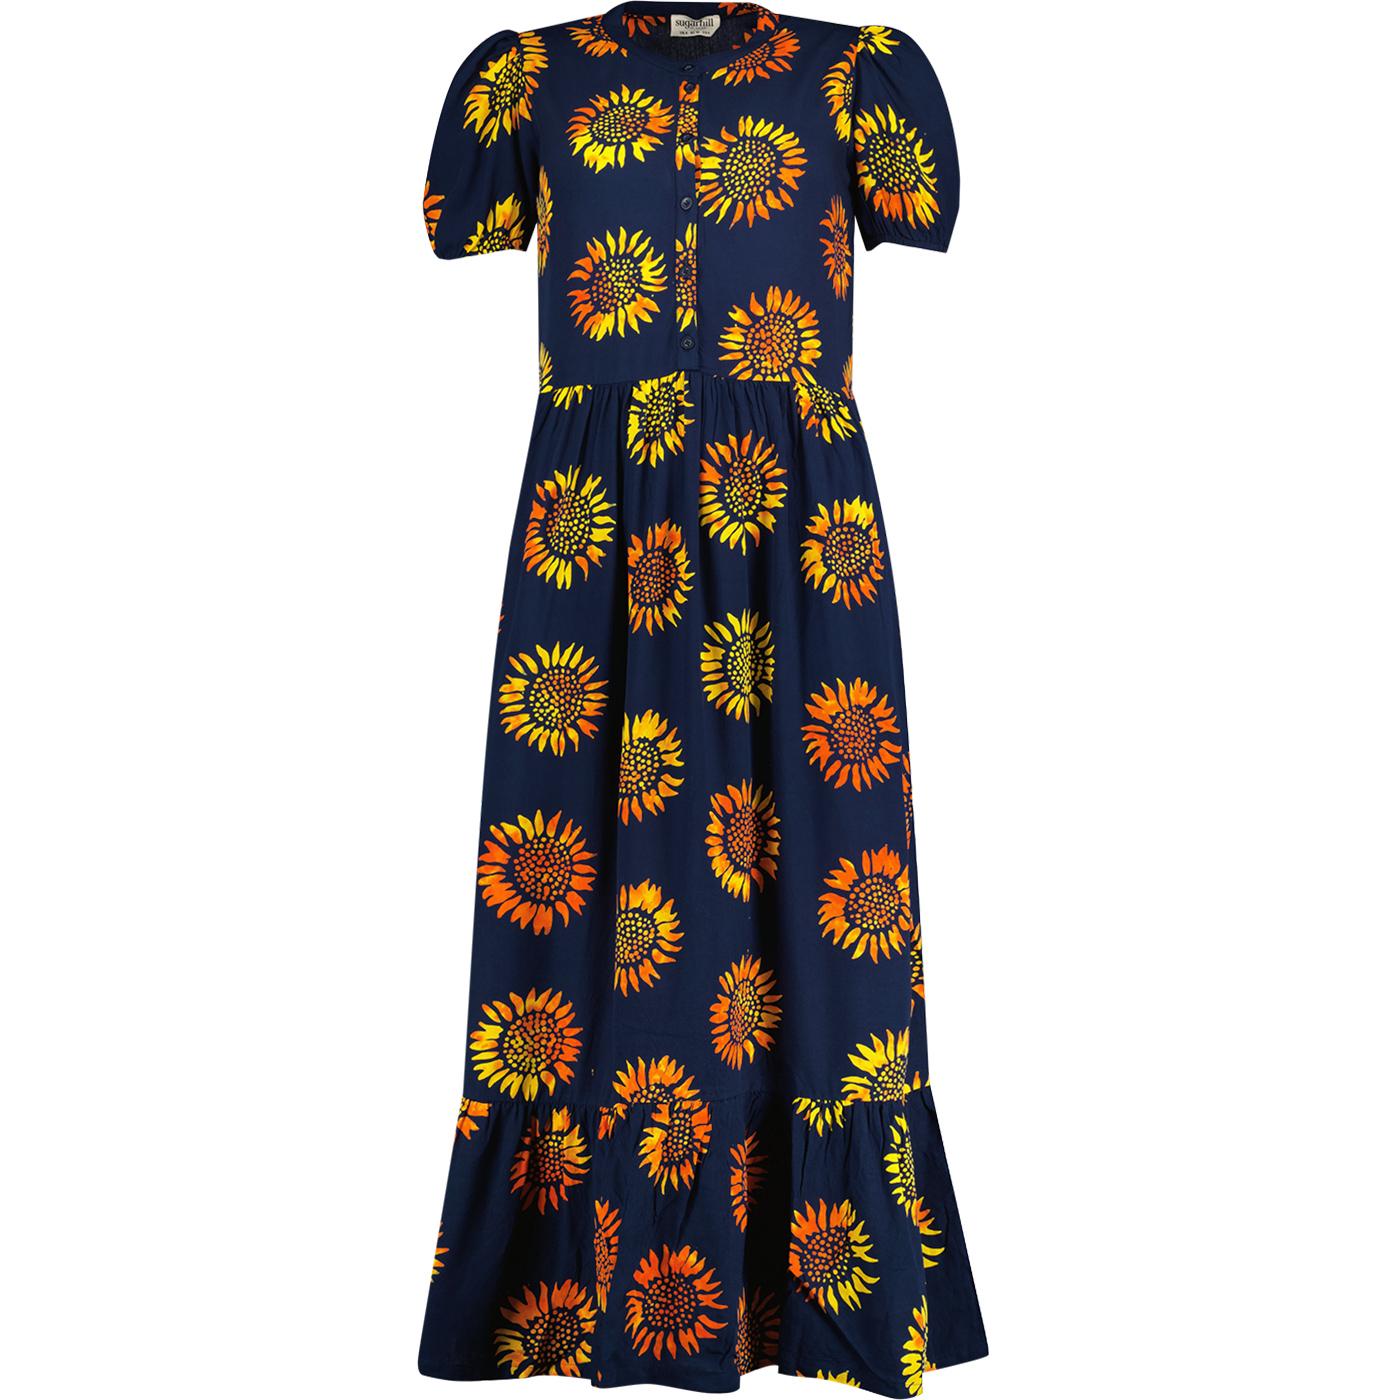 Tammy SUGARHILL Batik Sunflower Maxi Smock Dress